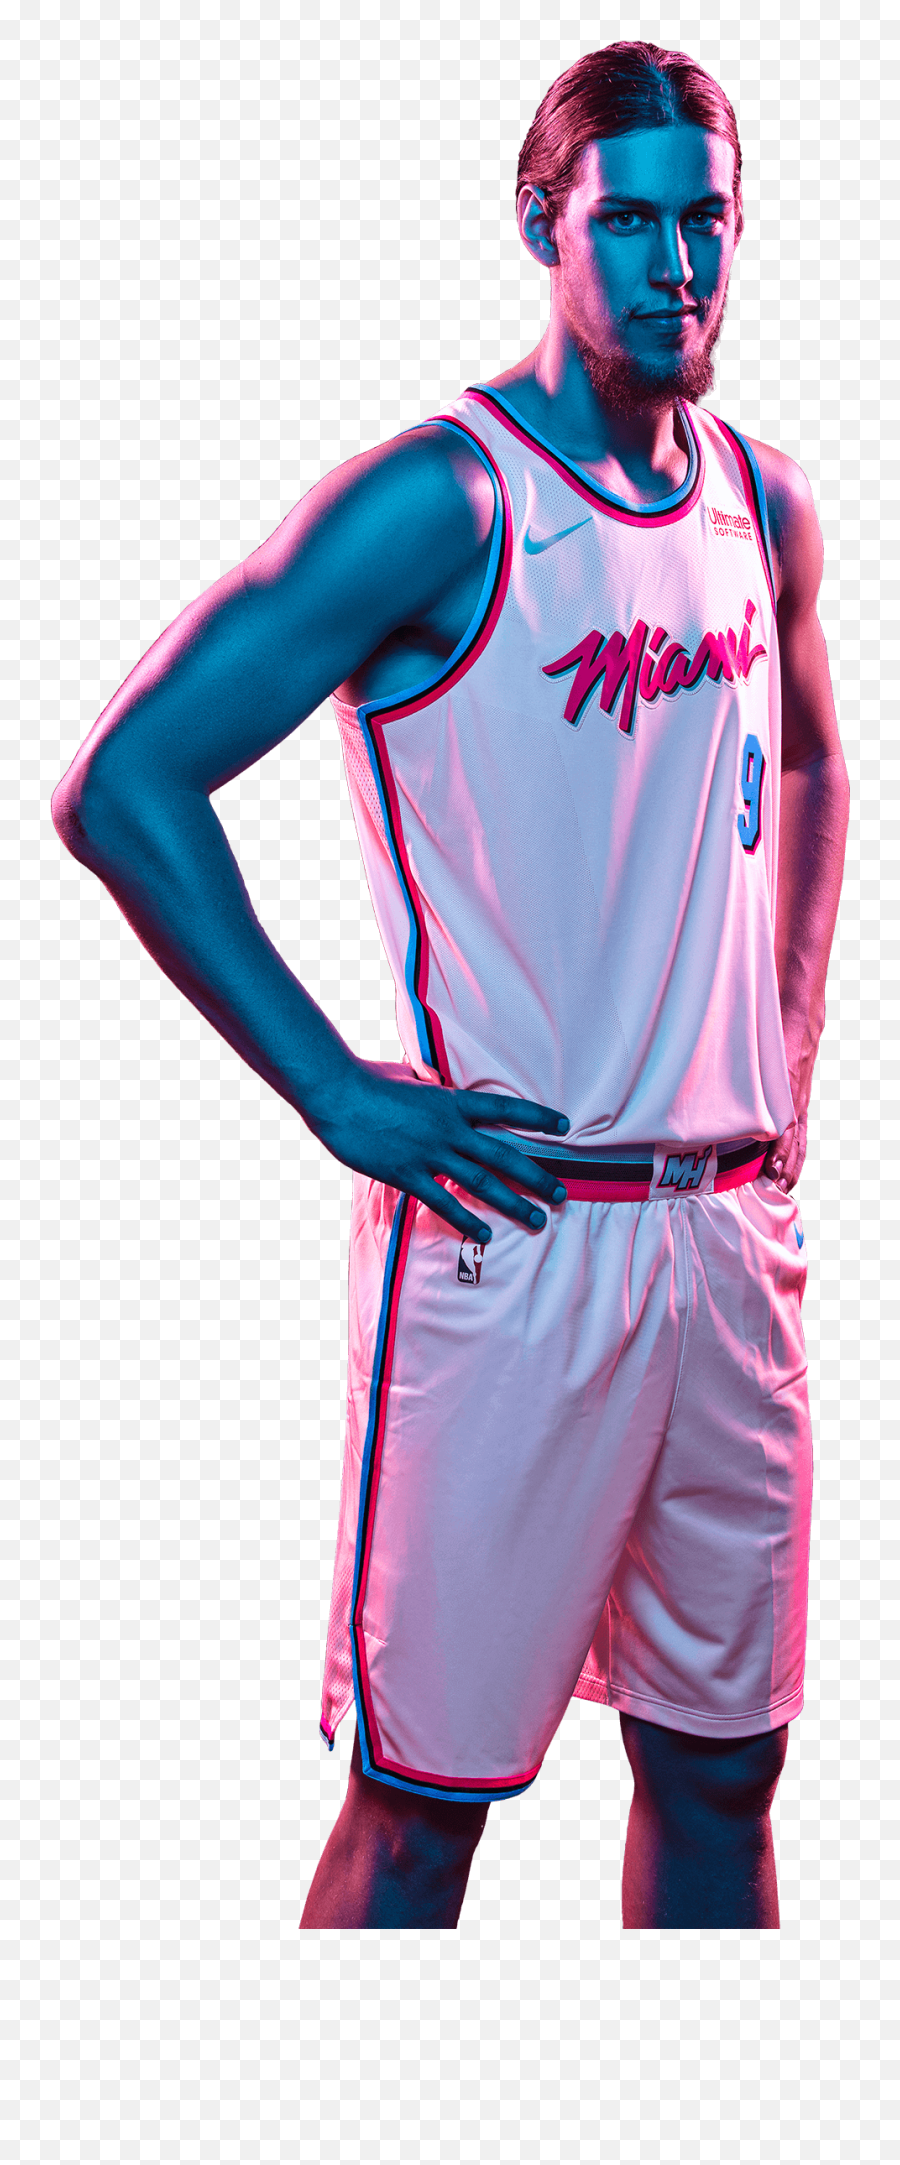 Vice Uniform Kelly Olynyk Kelly Olynyk Uniform Miami Heat - For Basketball Emoji,Miami Heat Vice Logo